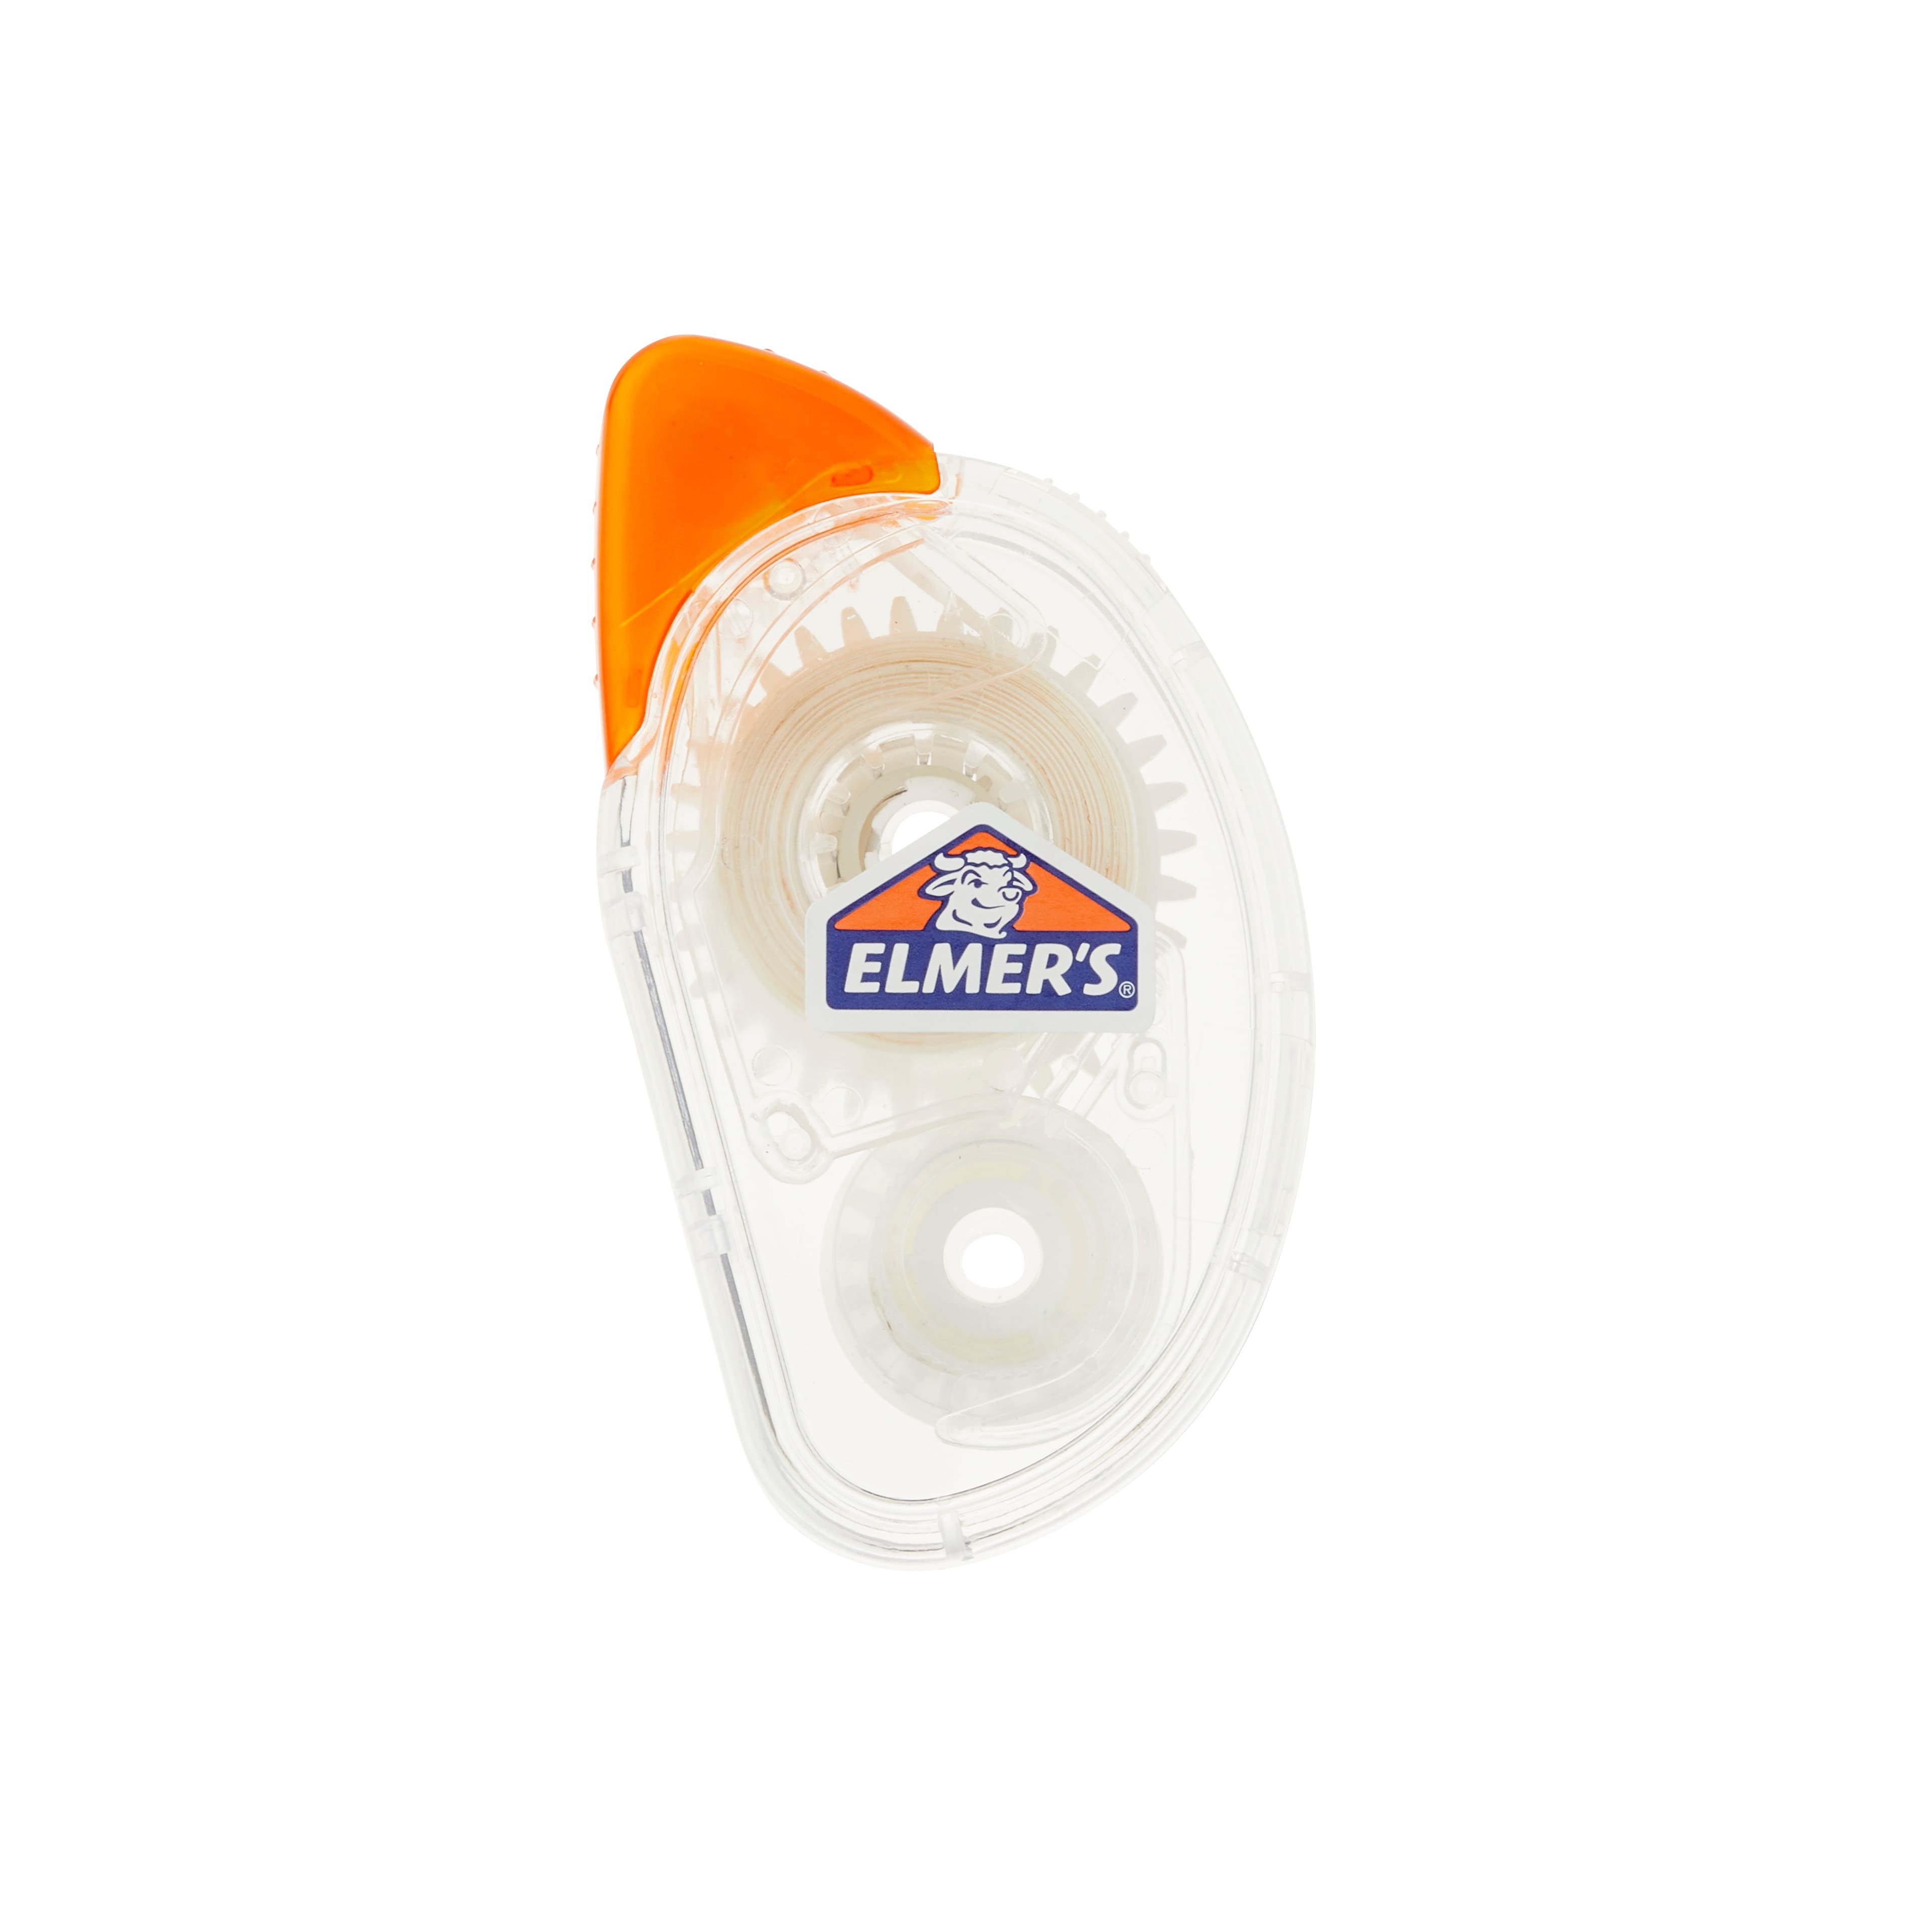 Elmer's CraftBond Permanent Tape Runner